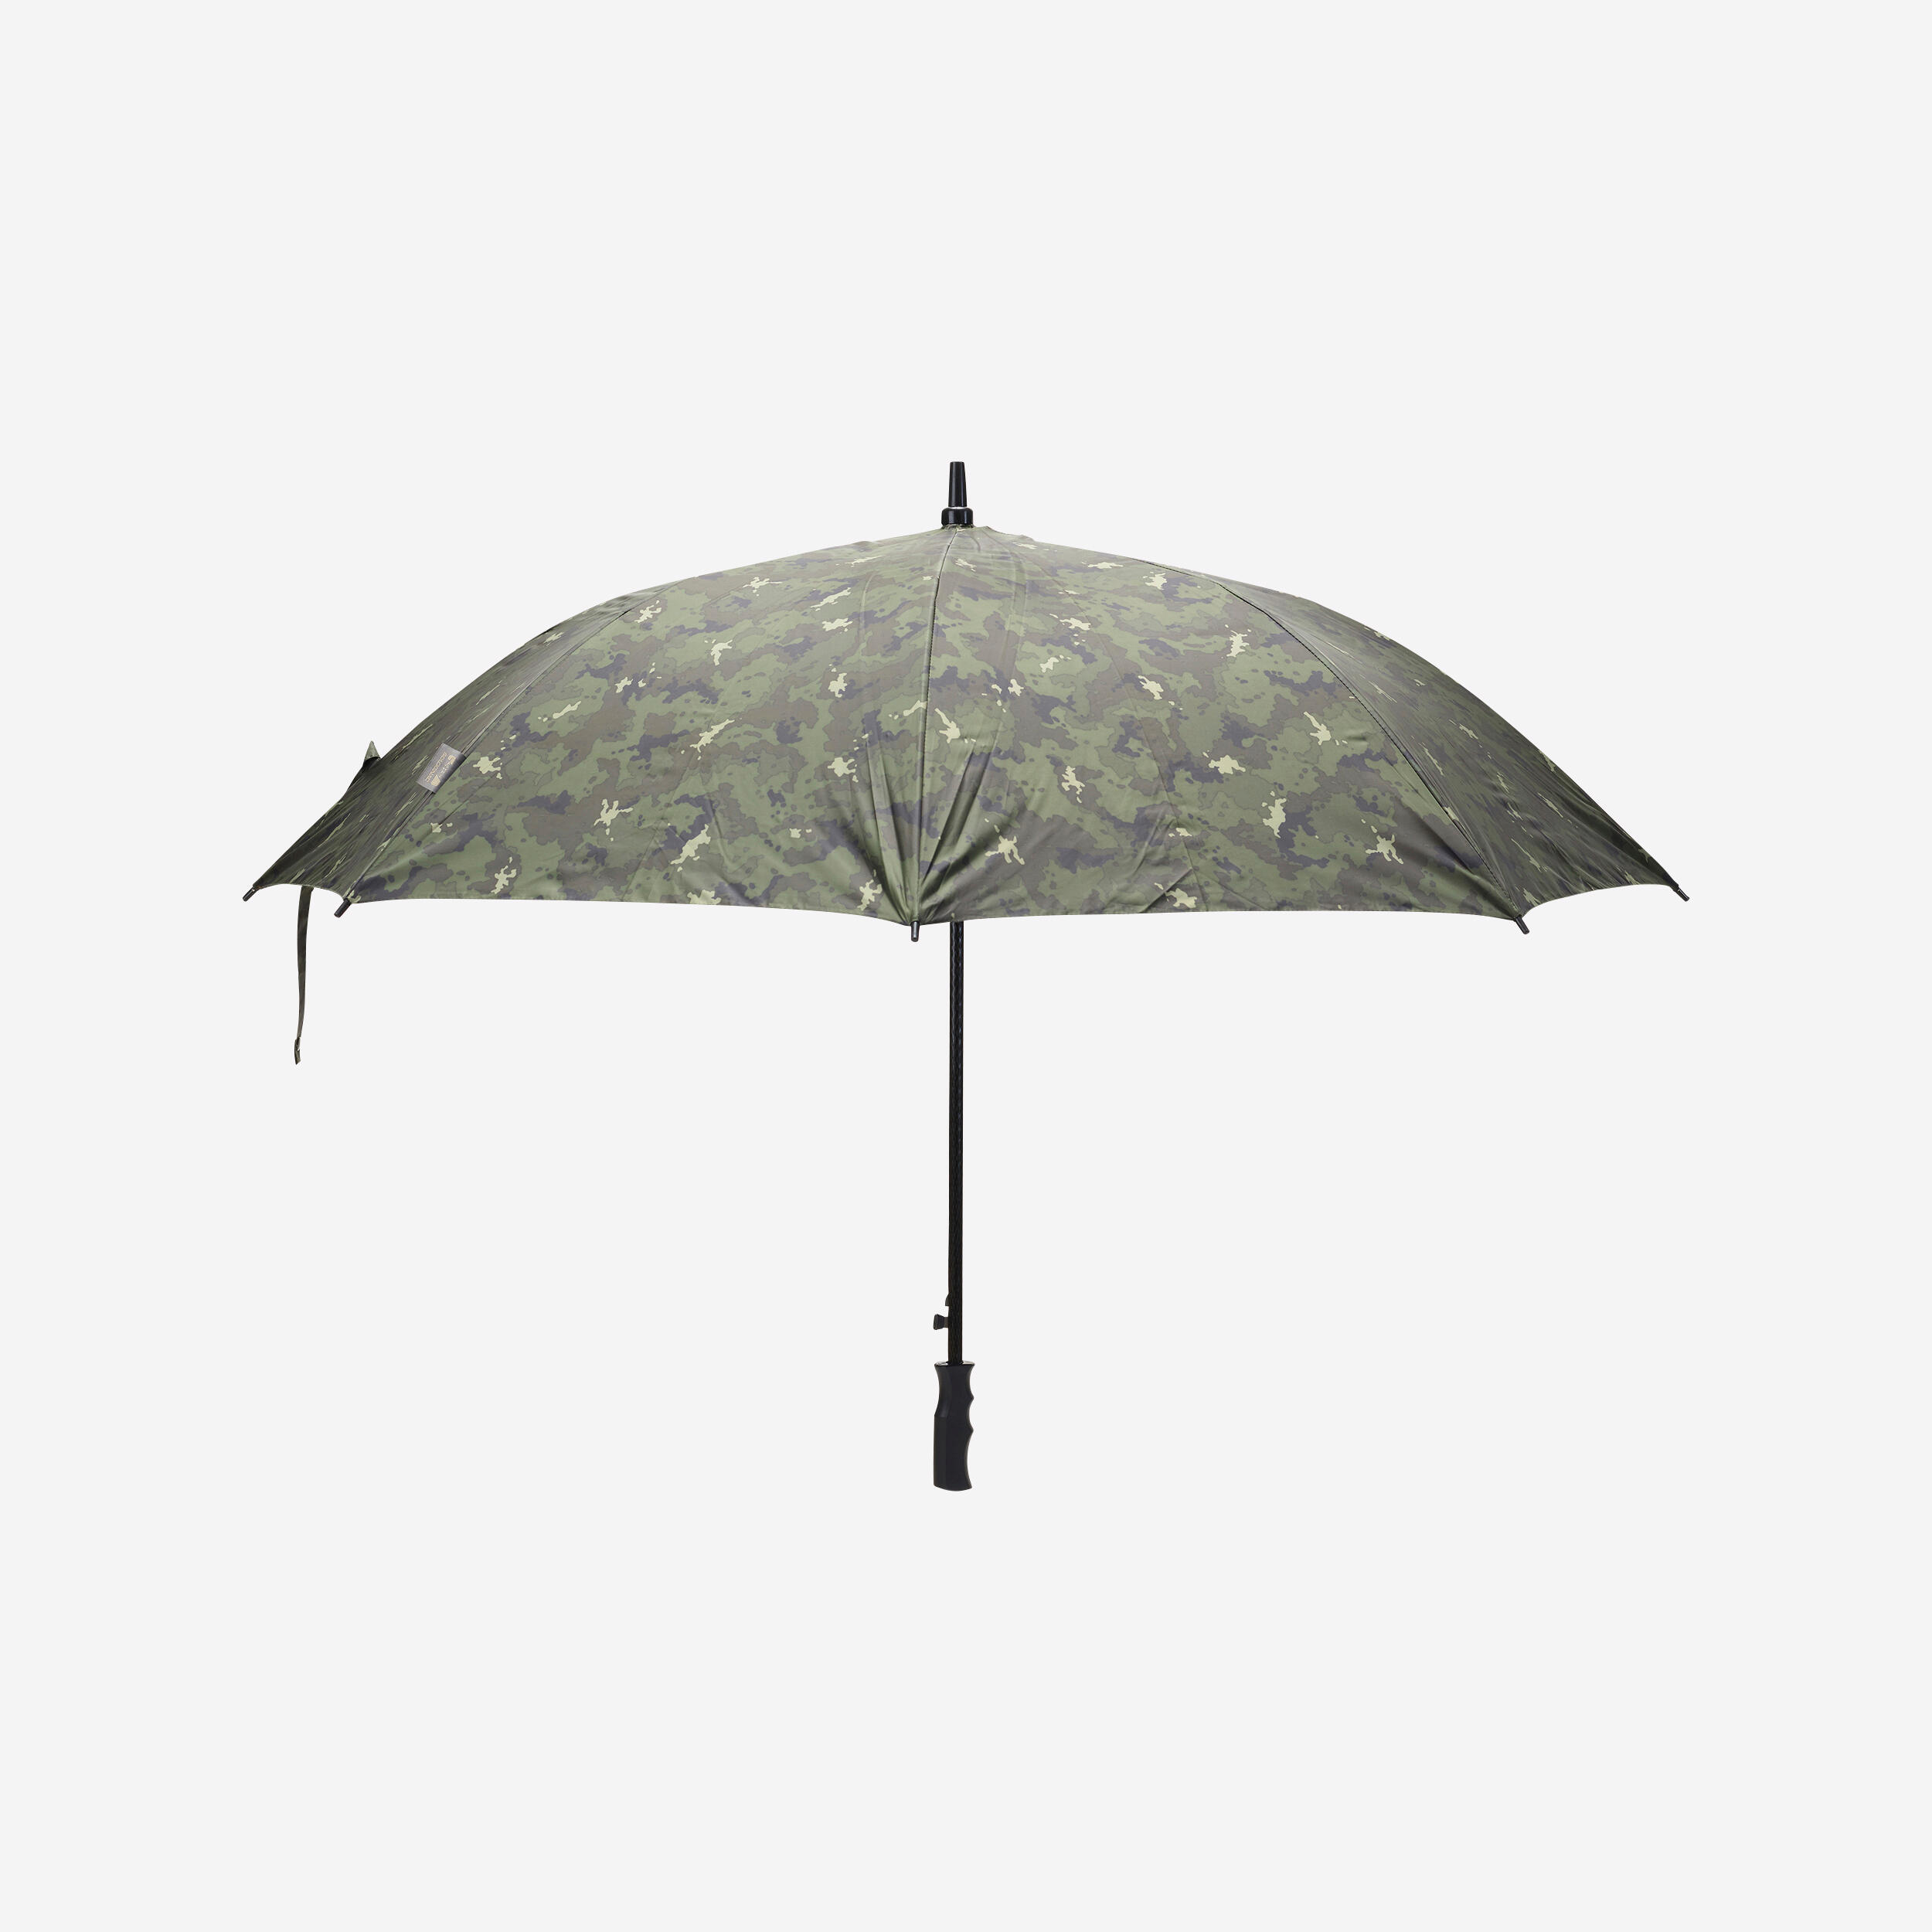 decathlon umbrella online